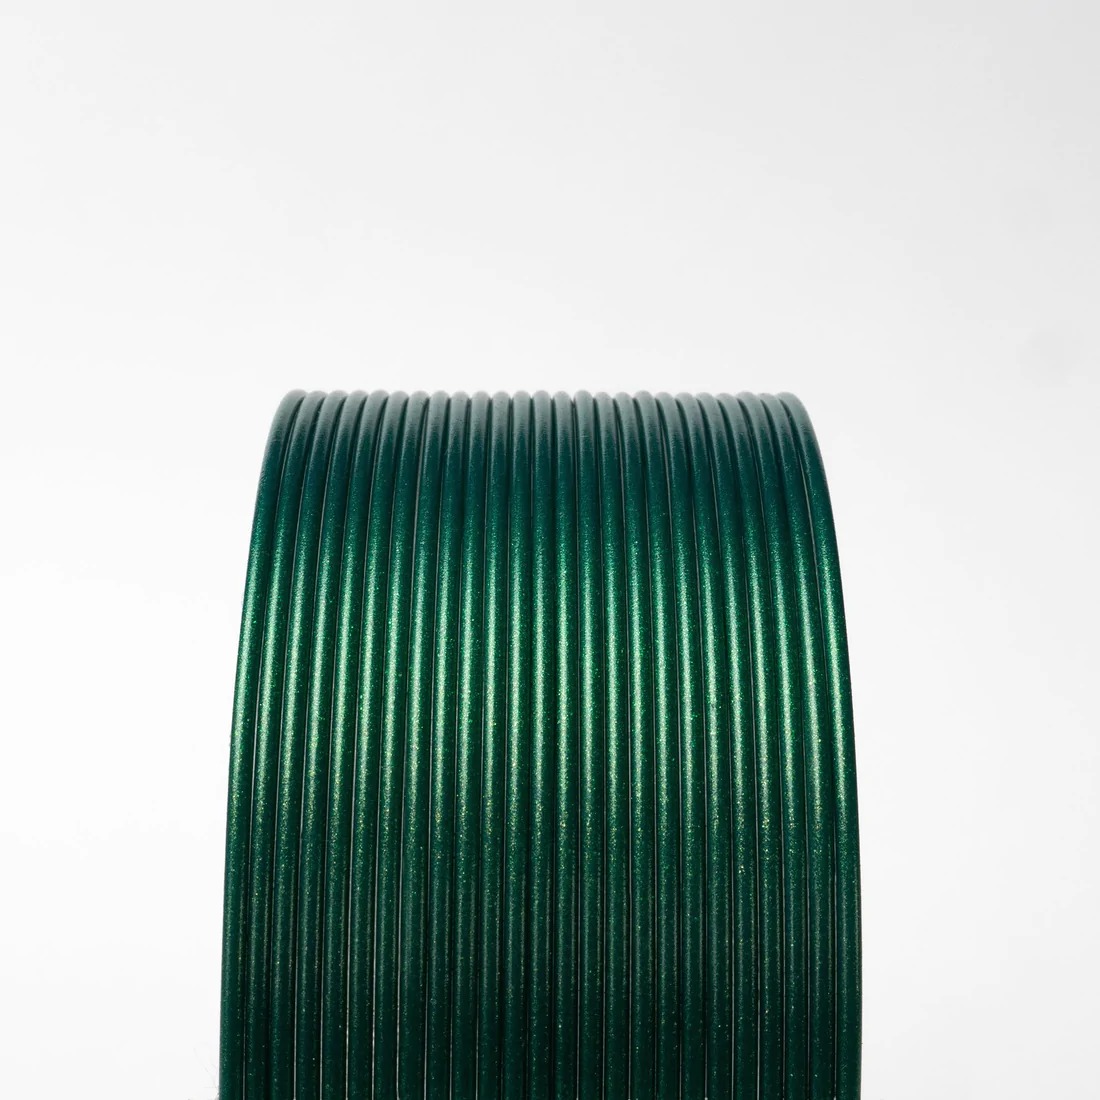 Cloverleaf Metallic Green HTPLA  2.85mm 3D printing filament